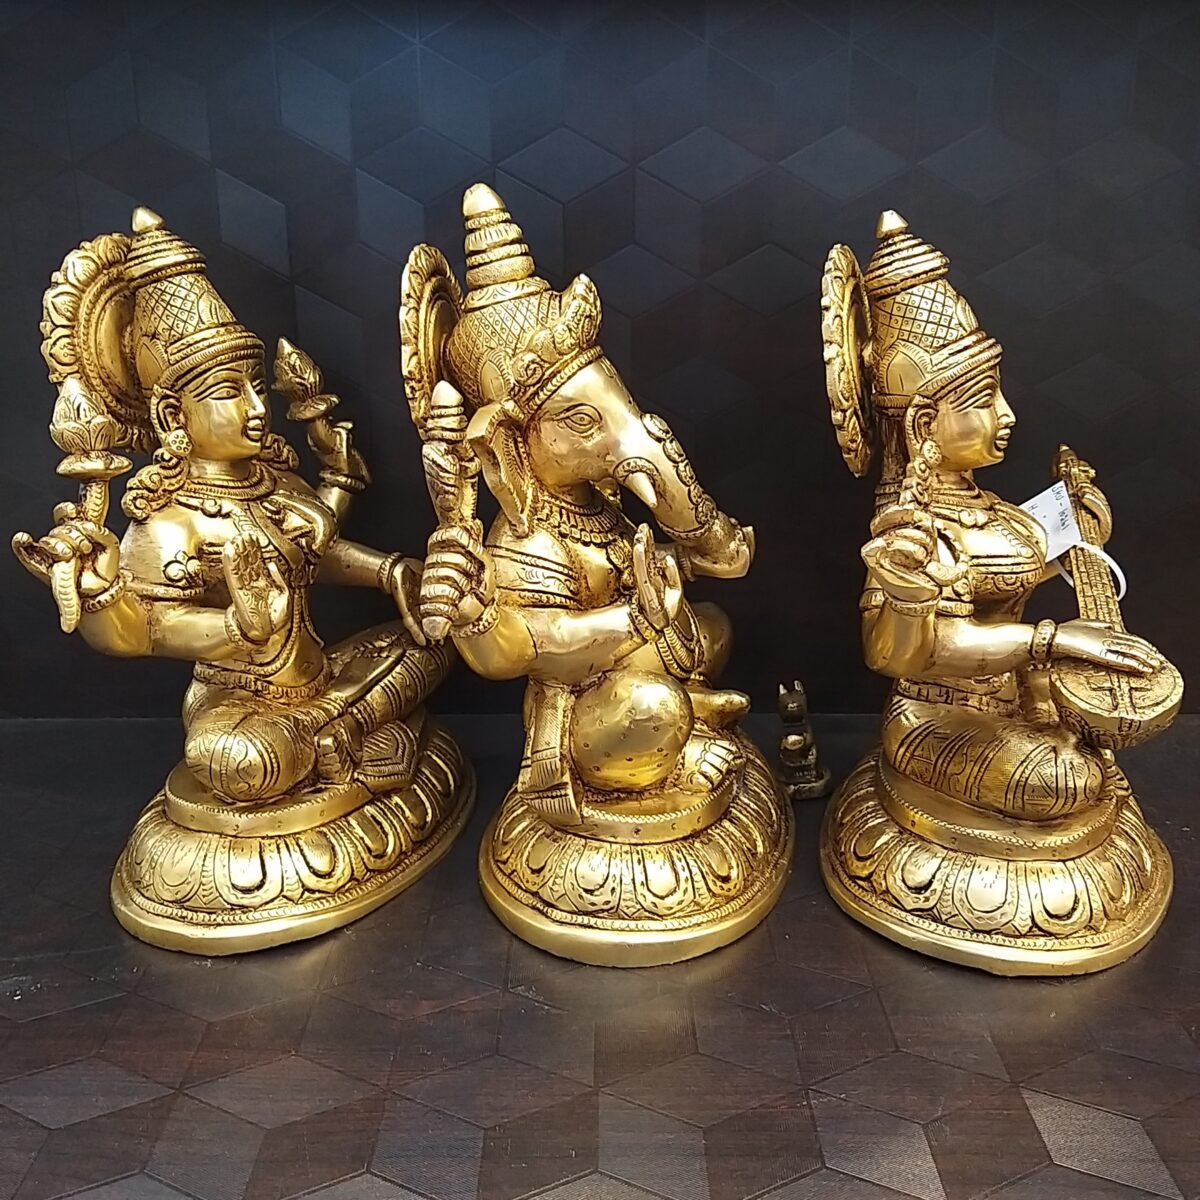 brass ganesha lakshmi set big statues hindu god statues home decor pooja items gift buy online india 10260 1 scaled